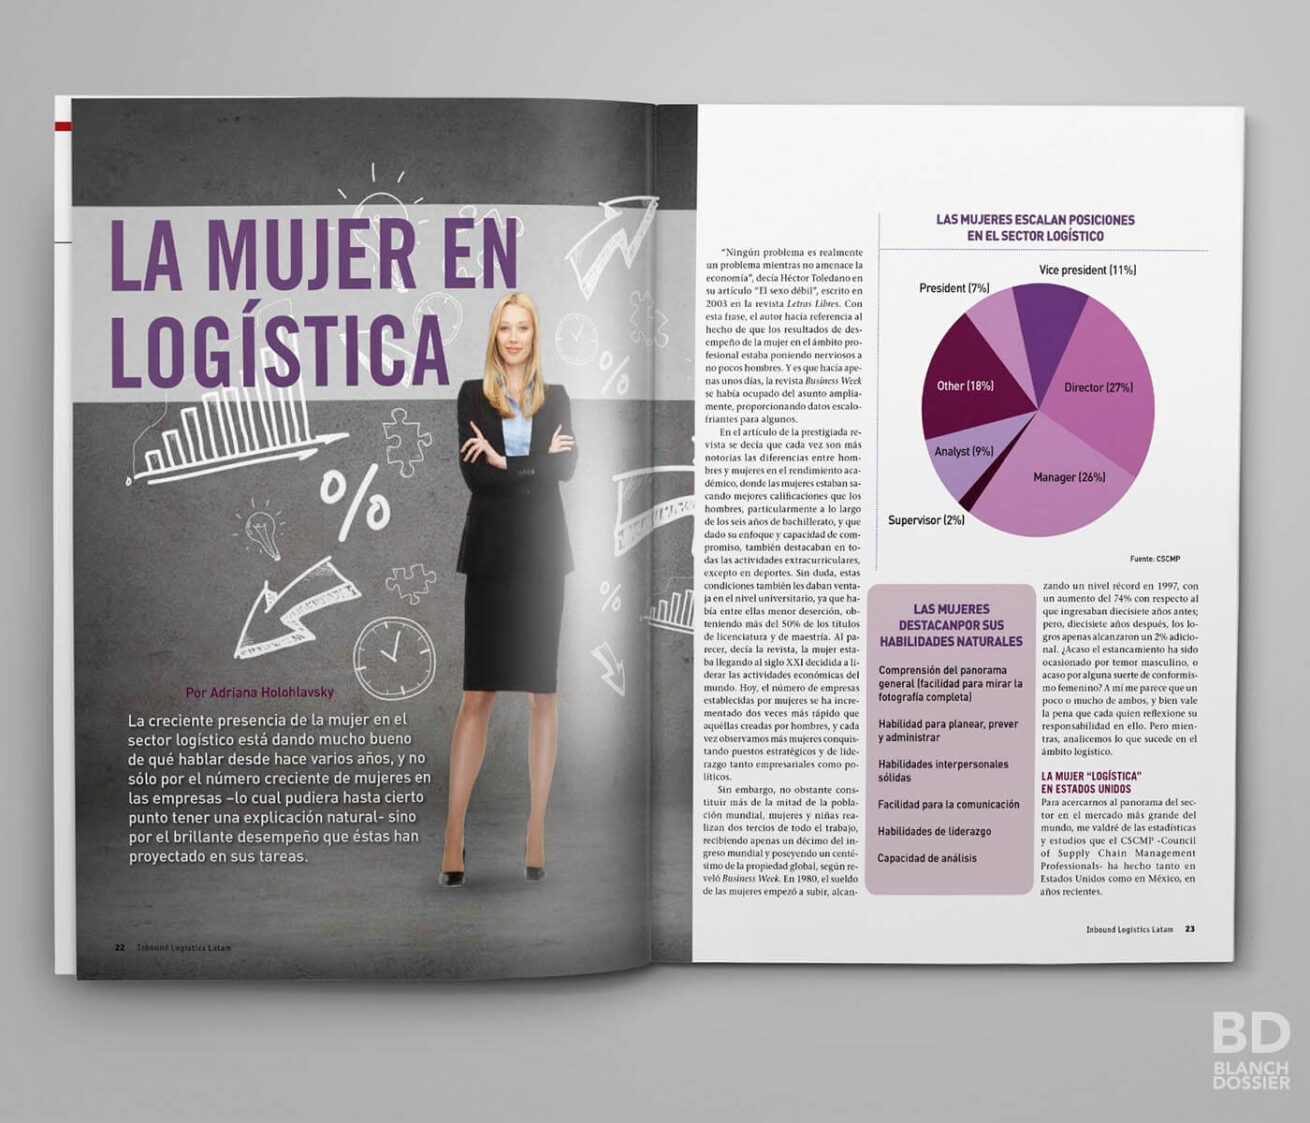 Revista Inbound Logistics Latam - Diseño Editorial